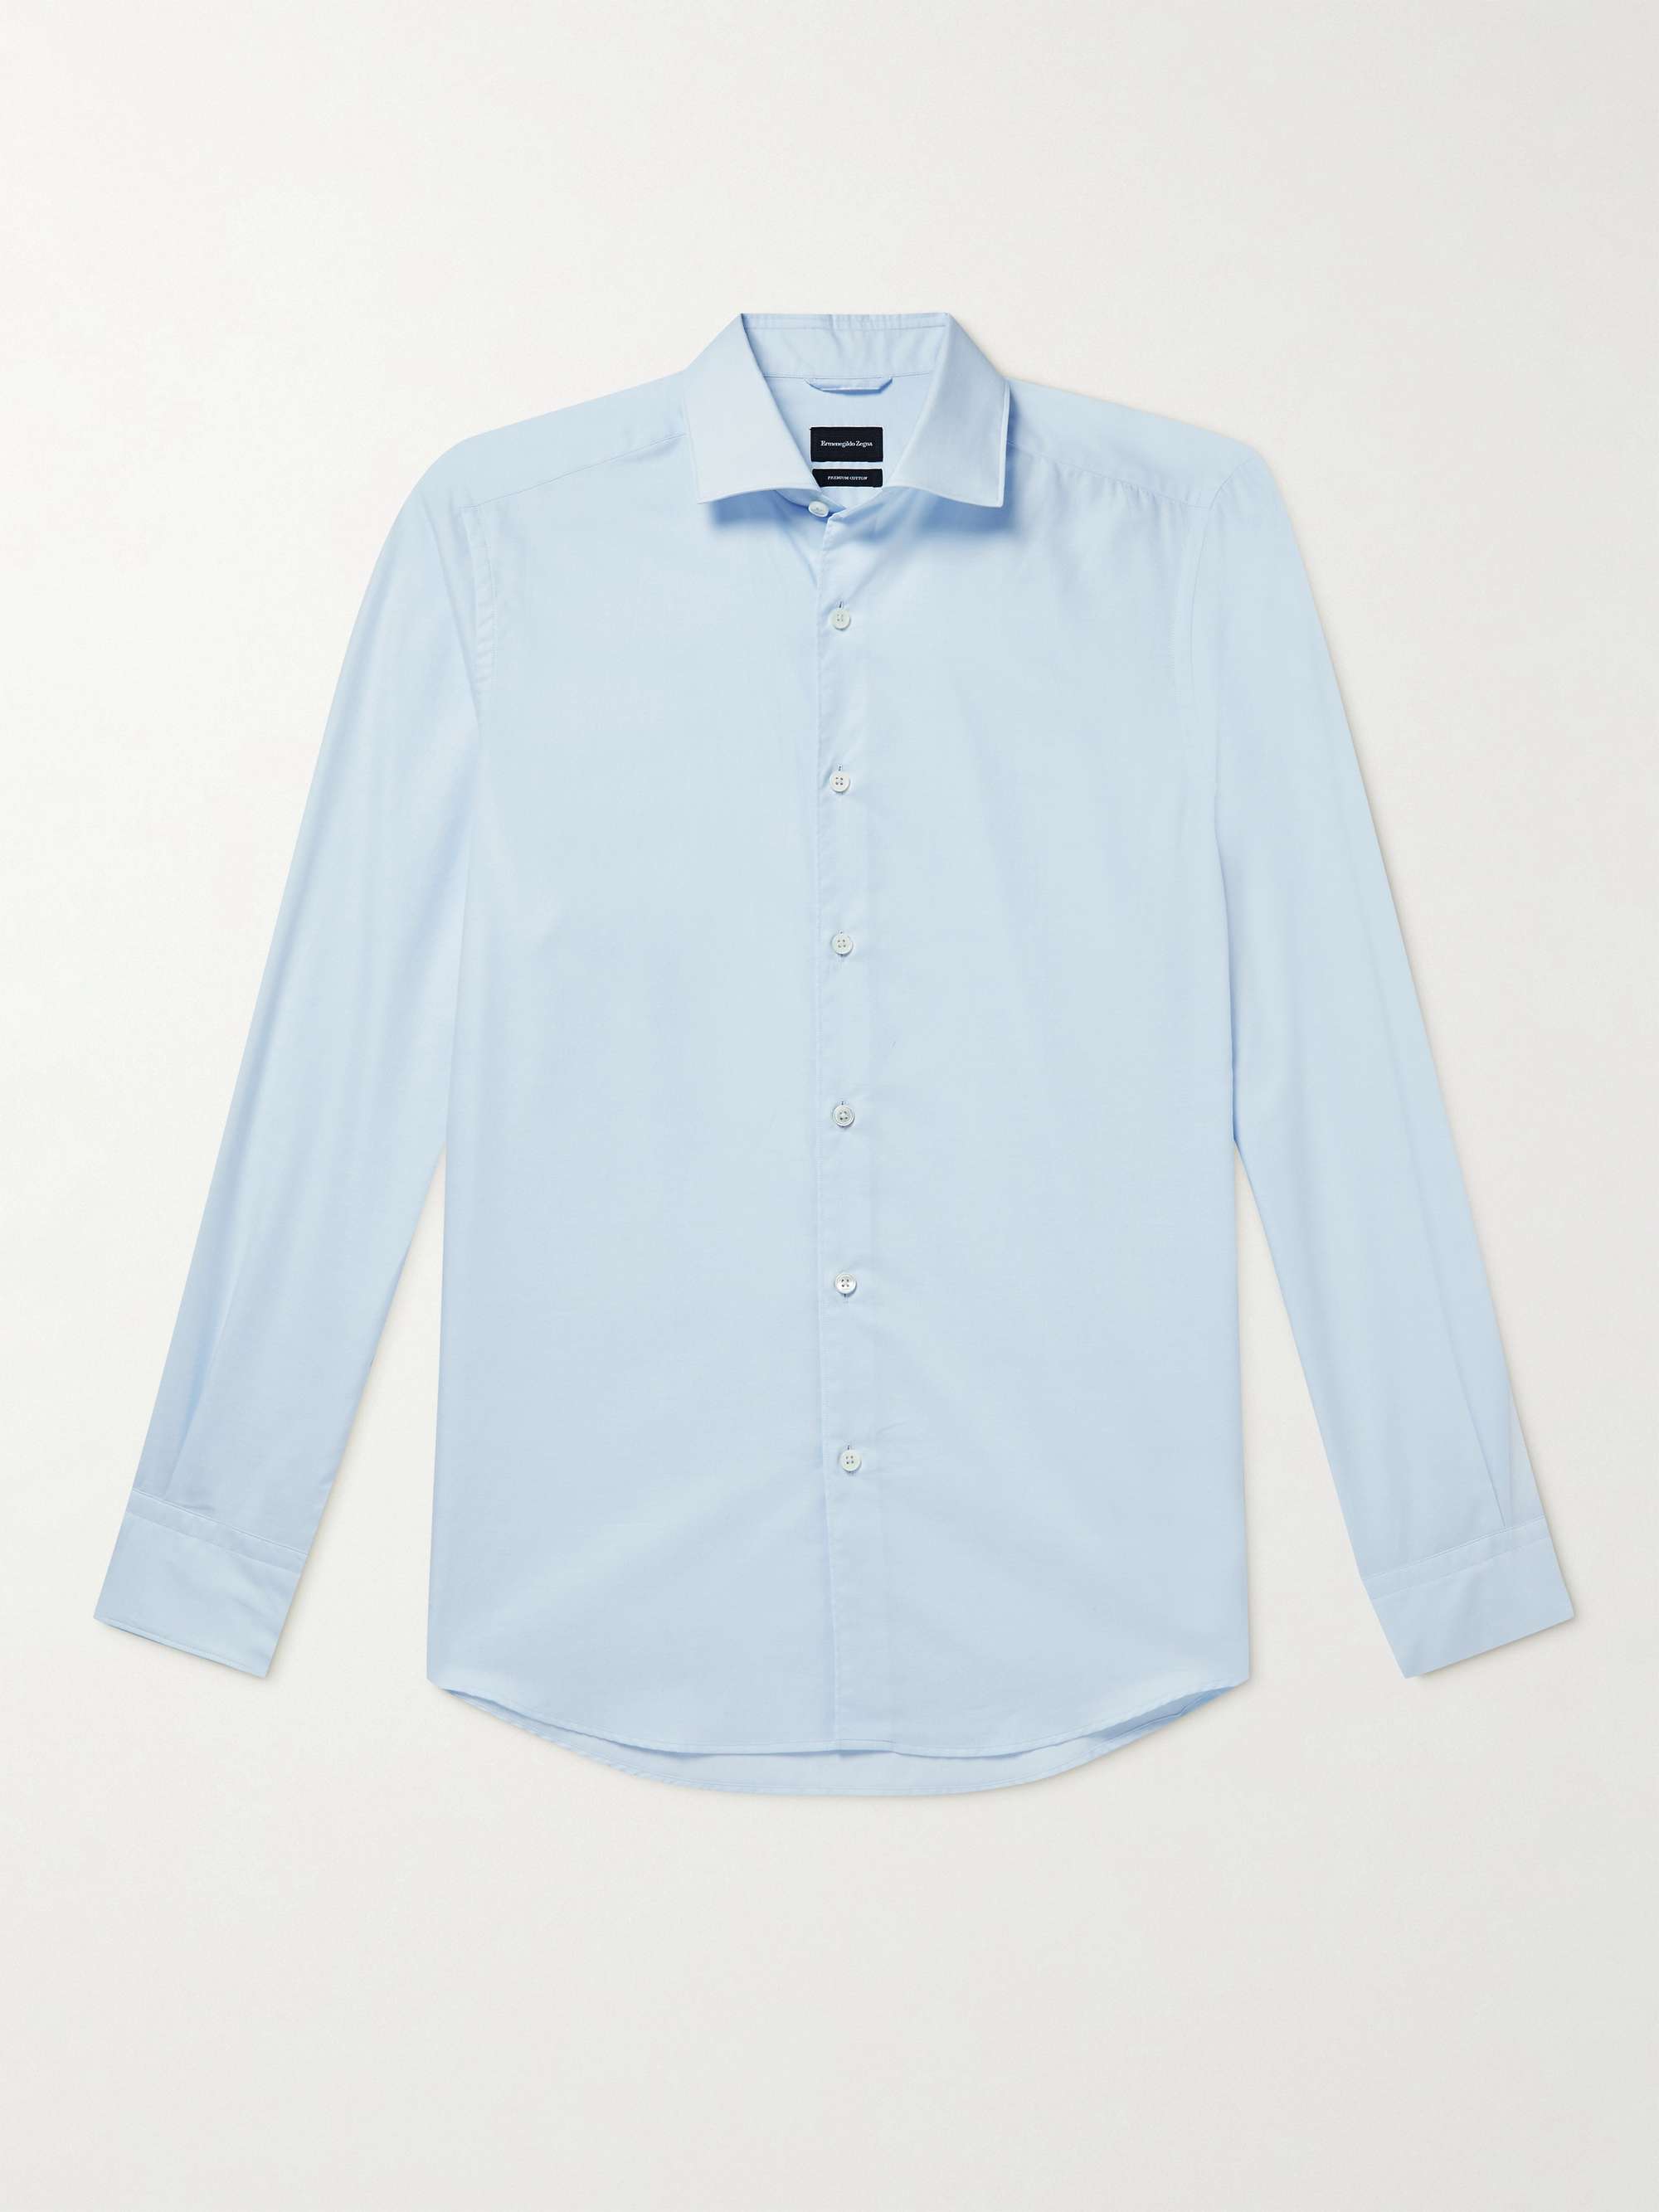 ZEGNA Cotton Oxford Shirt